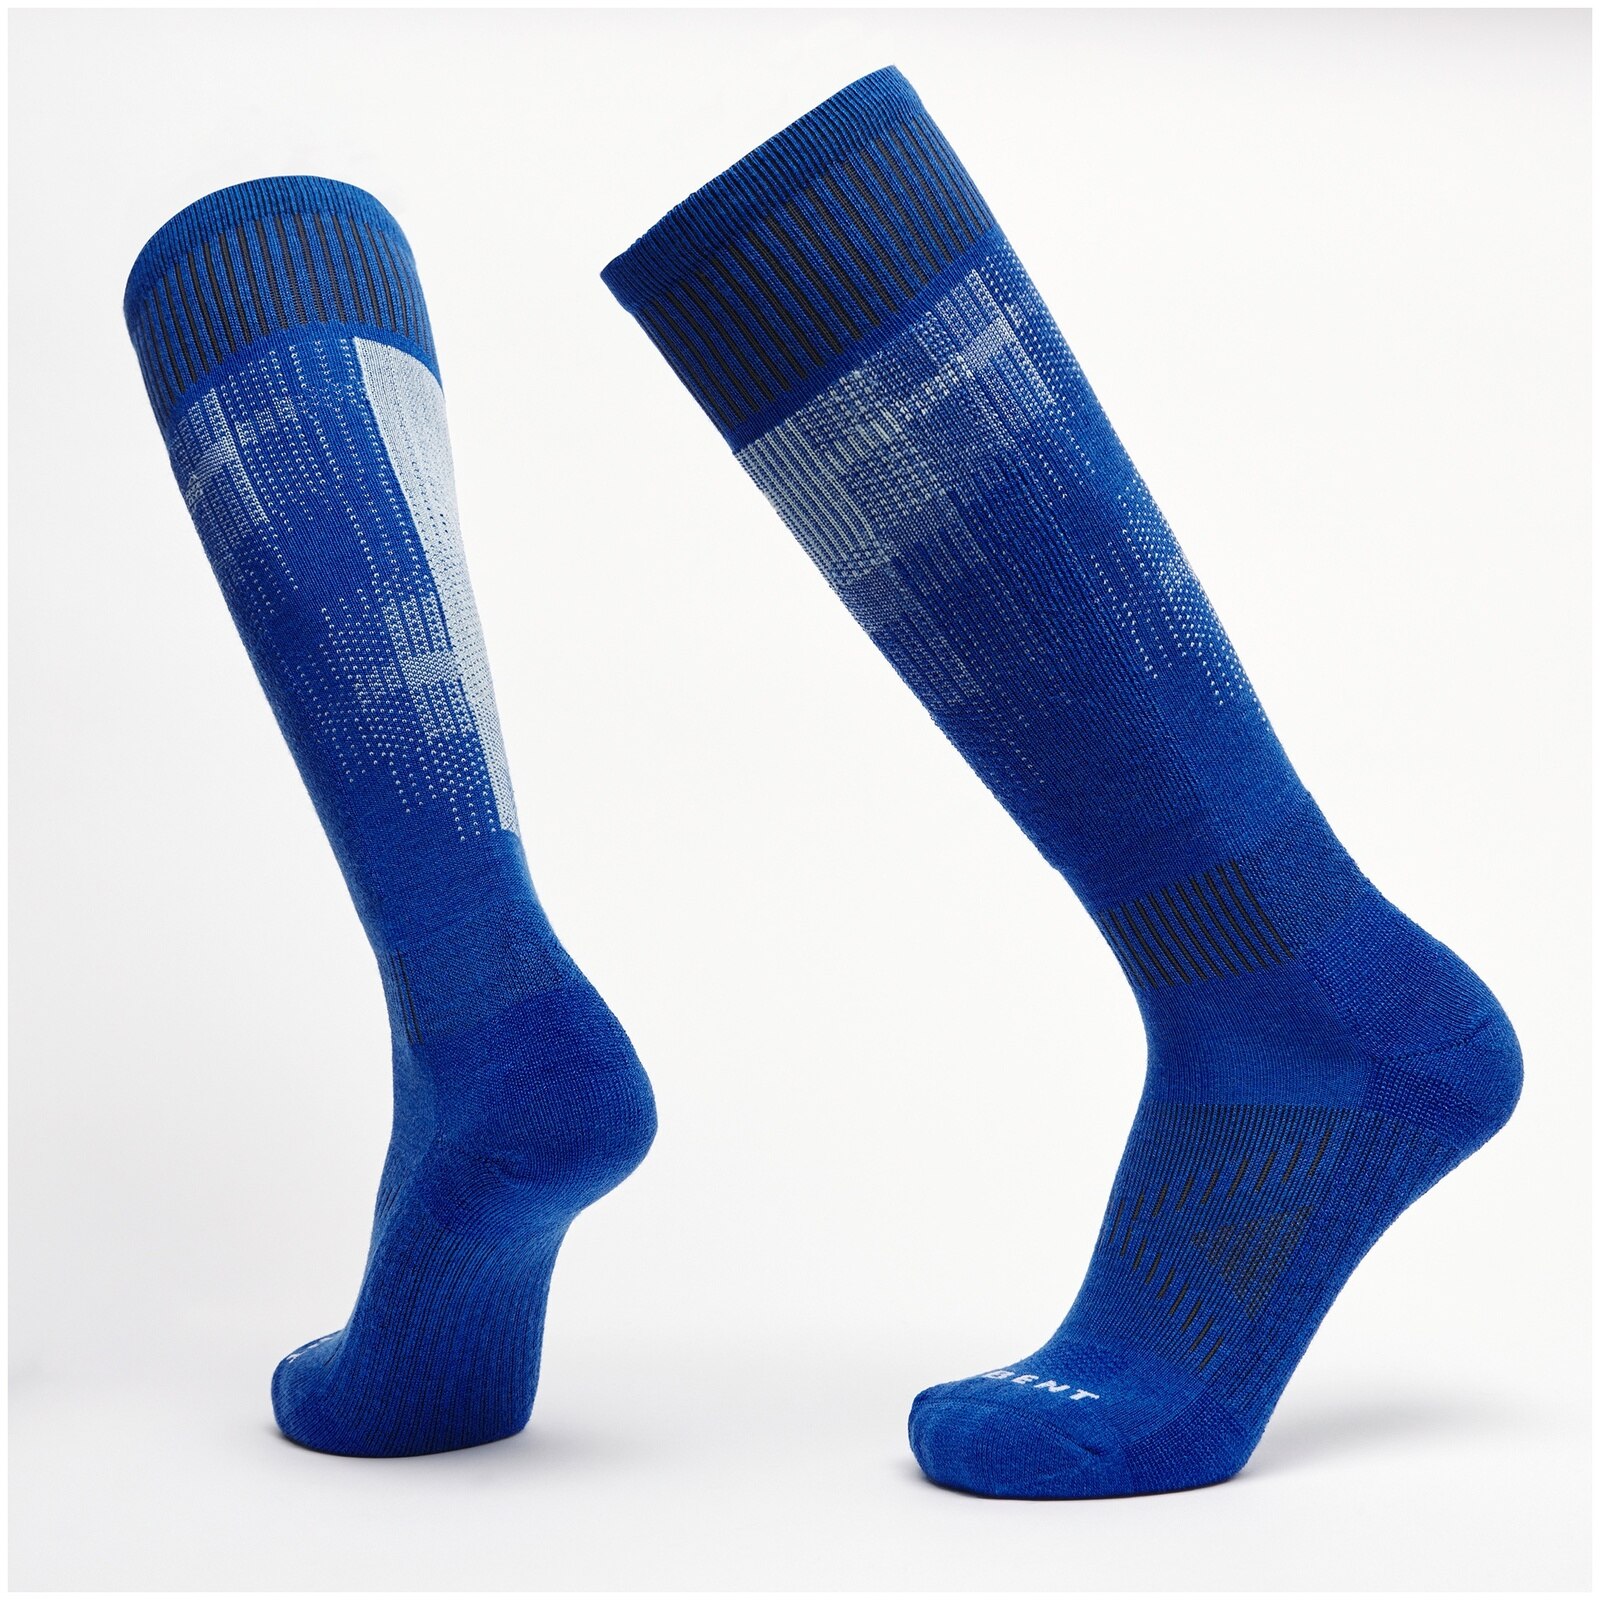 Le Bent Men's Pixel Light Ski Socks - Powder7